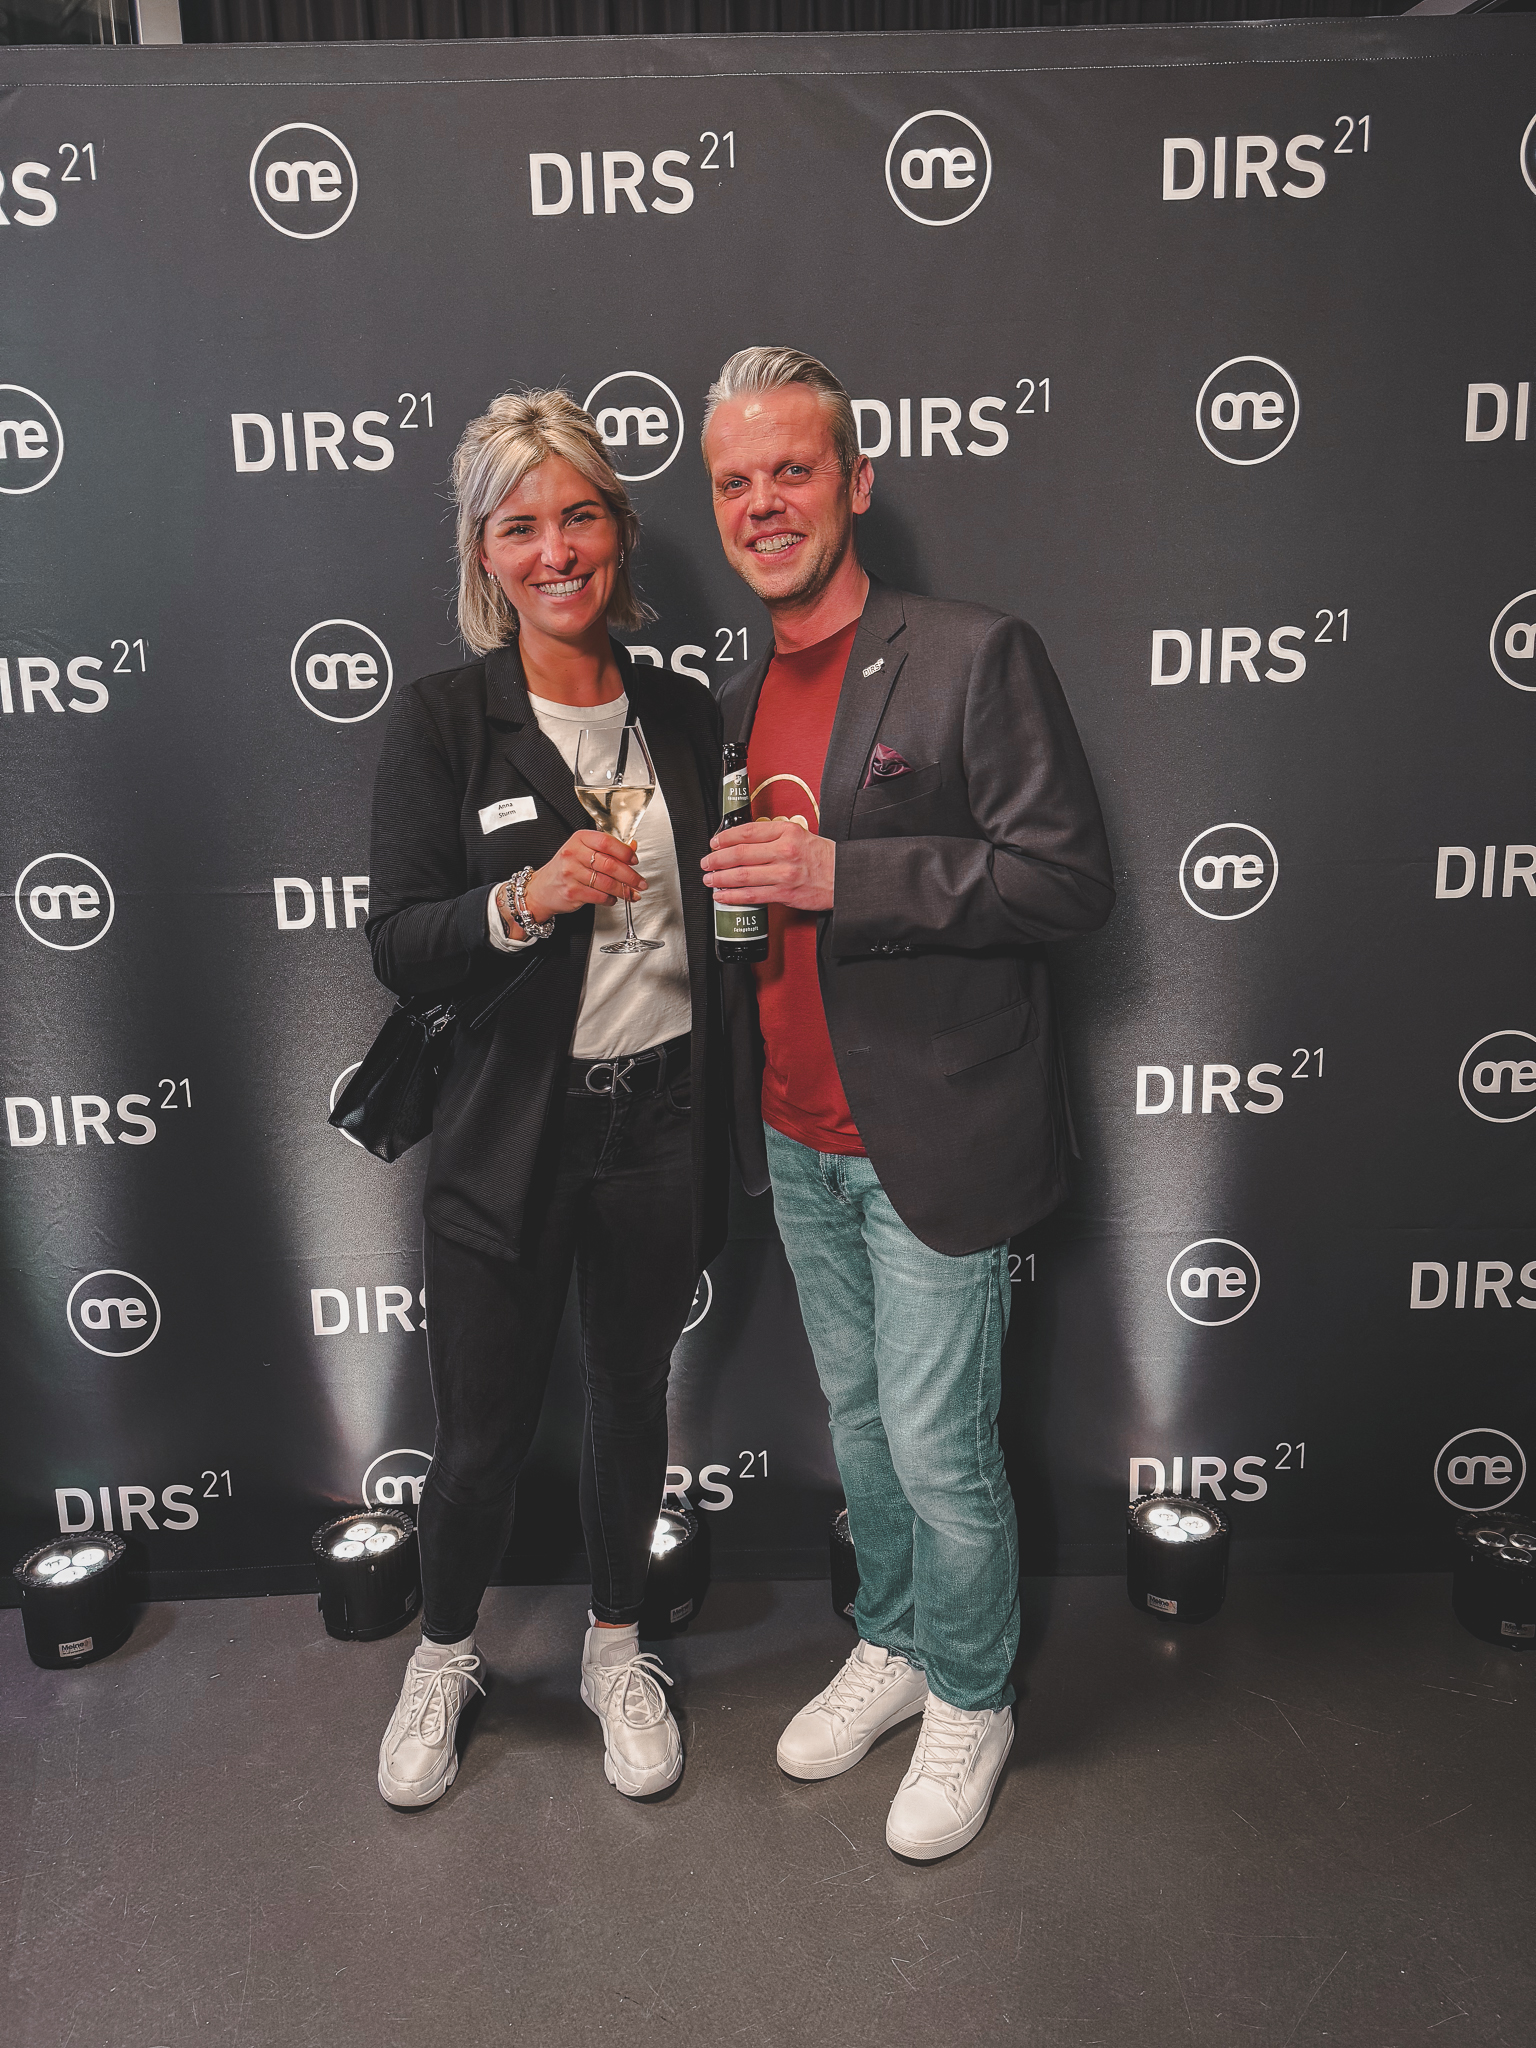 DIRS21 one Release und ibelsa